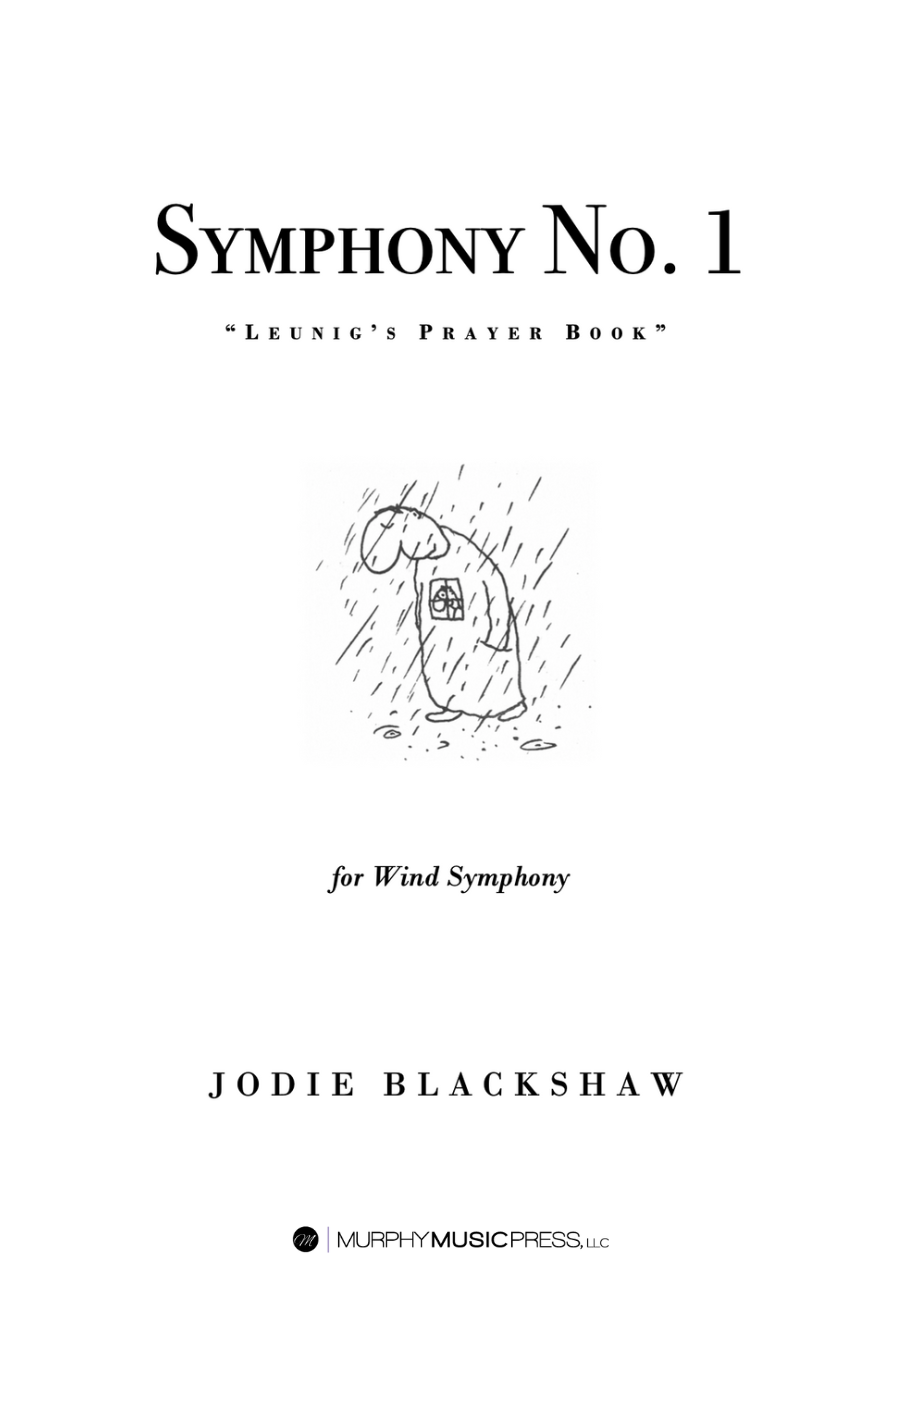 Symphony No. 1, Leunig's Prayer Book (Score Only) by Jodie Blackshaw